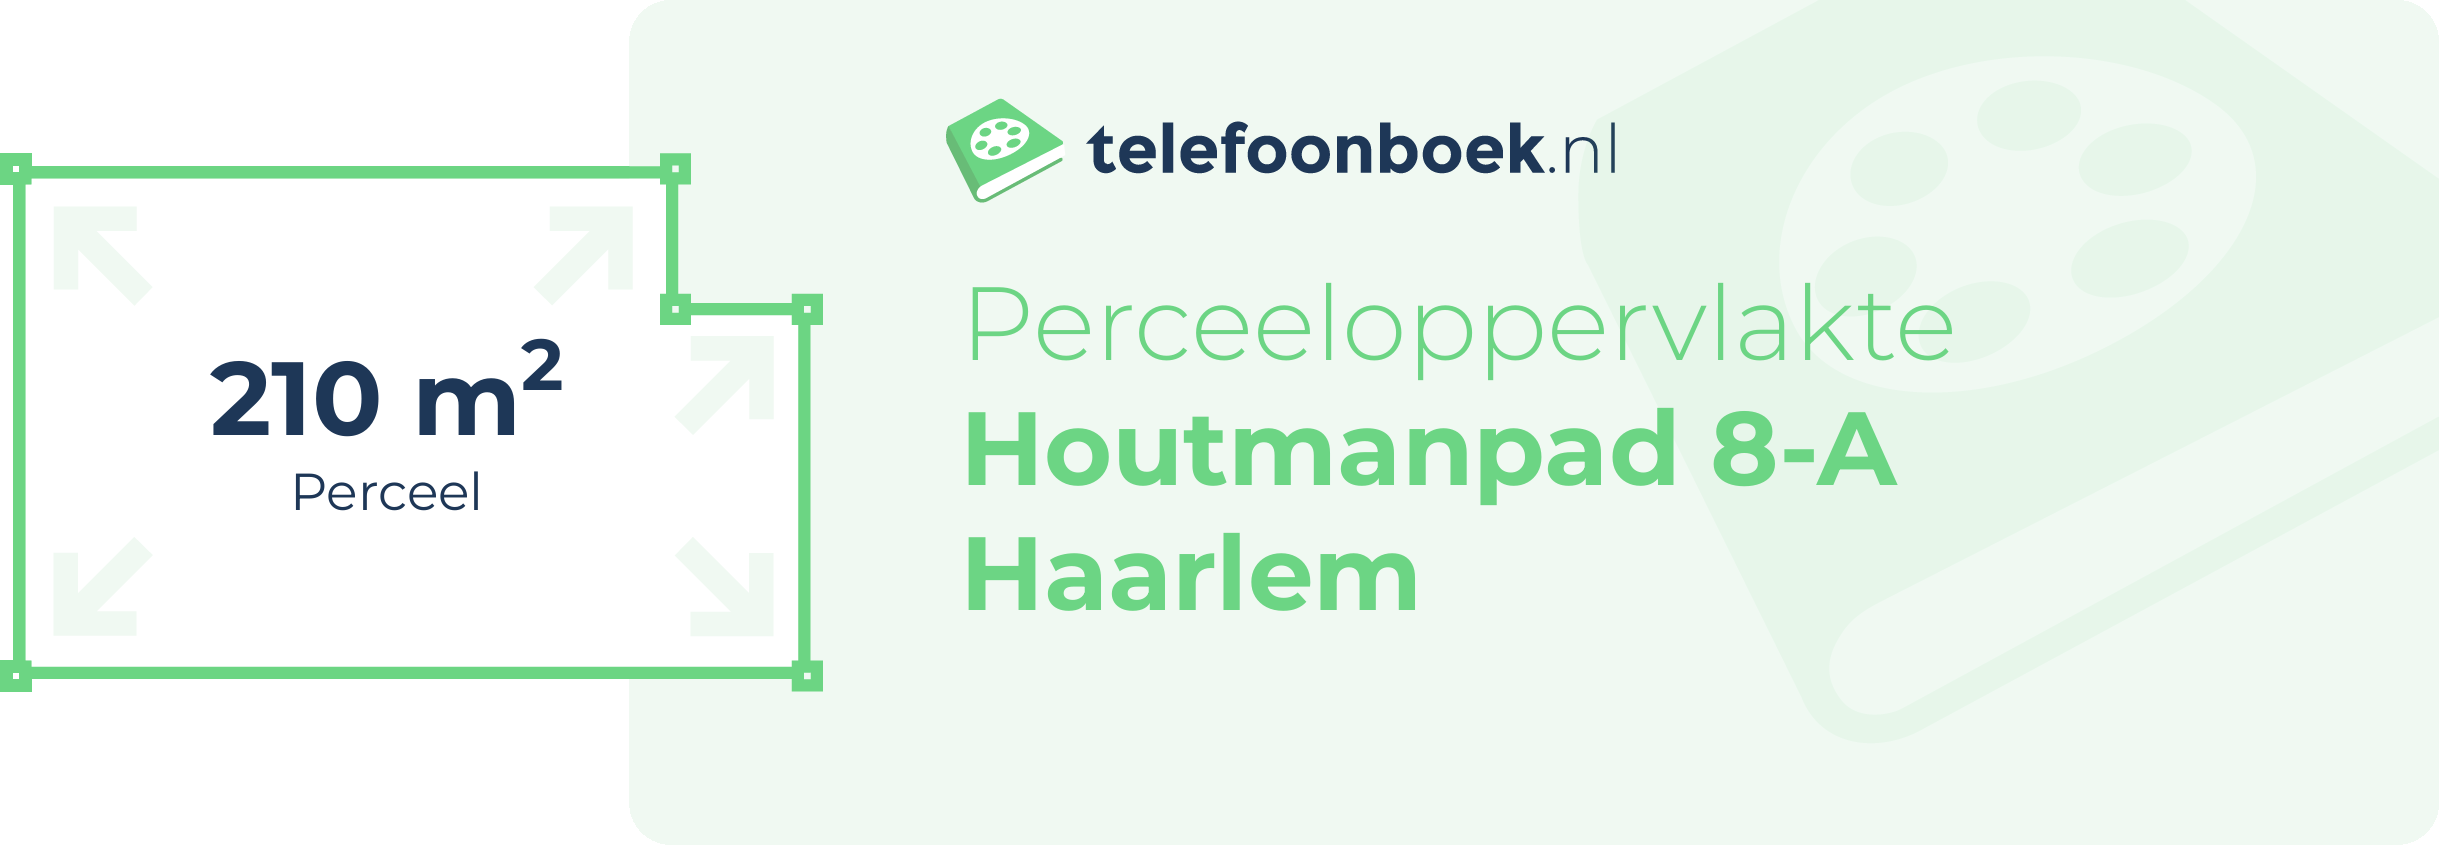 Perceeloppervlakte Houtmanpad 8-A Haarlem